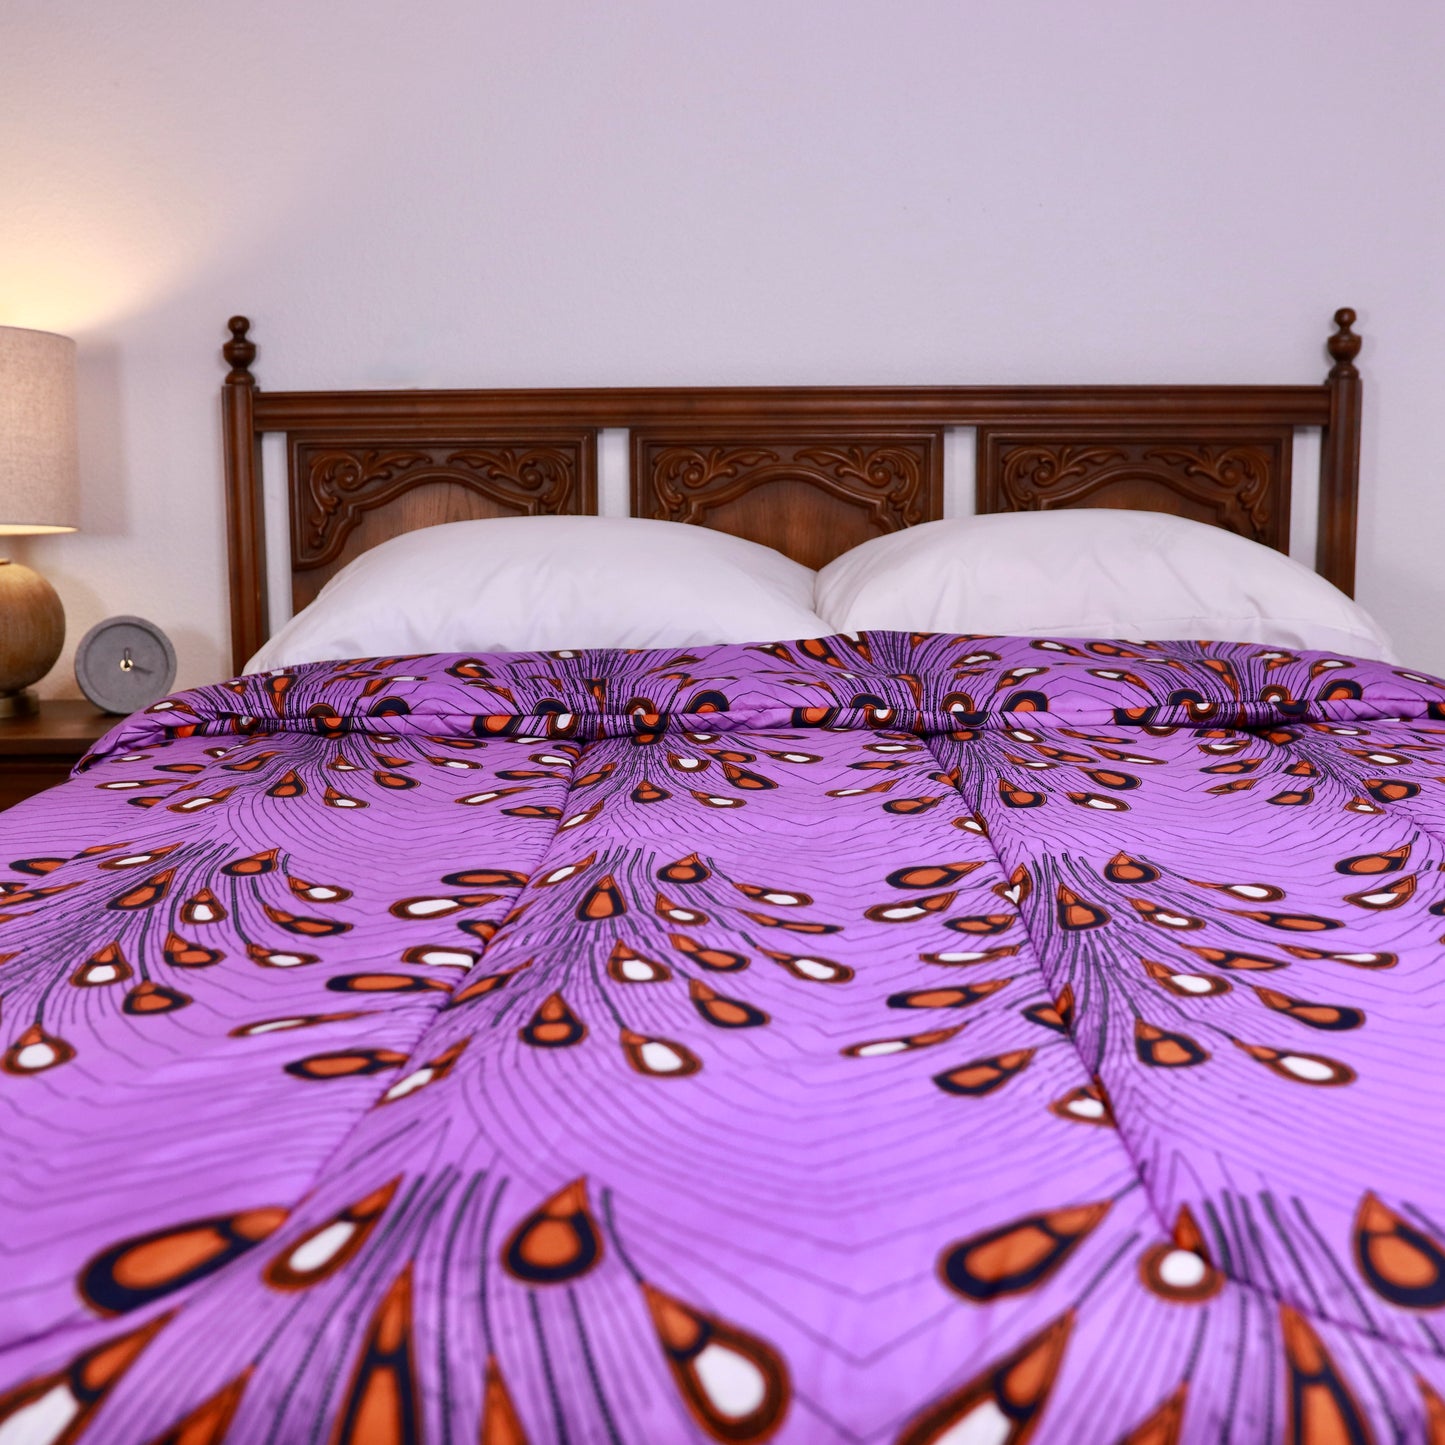 Nakuru | Luxury African Print Ankara Goose Down Alternative 100% Cotton Comforter